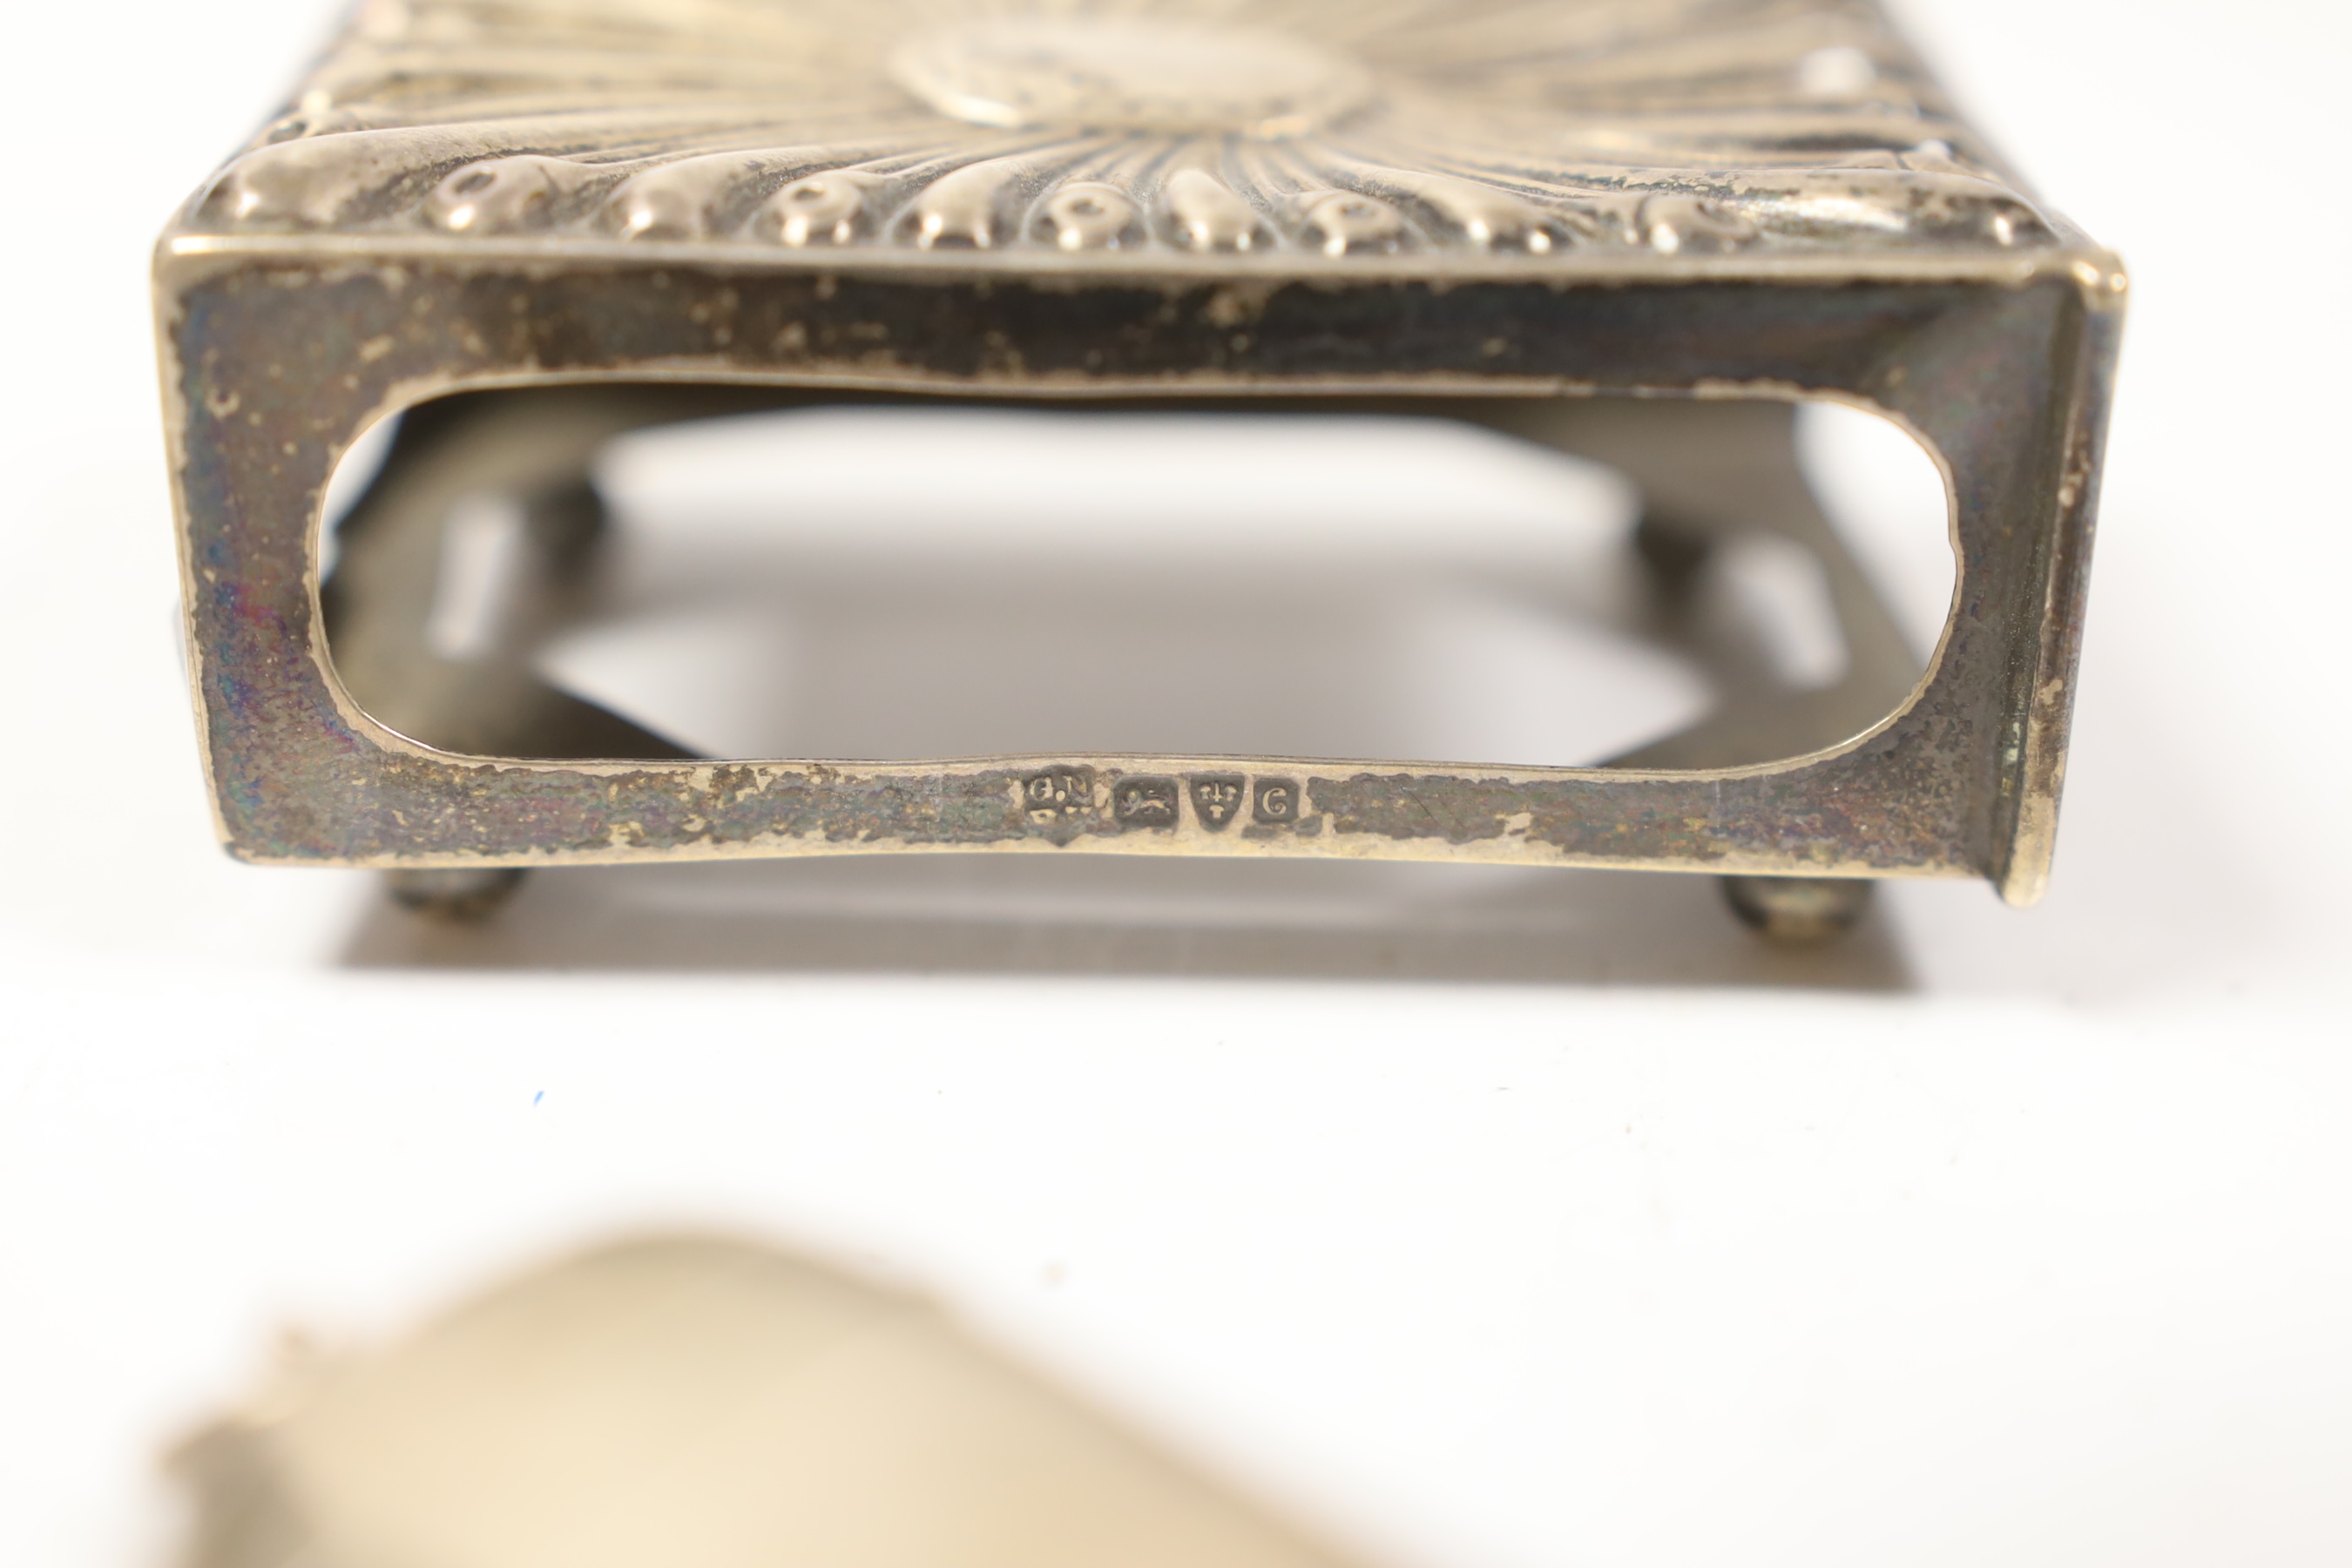 A silver vesta case, an Edwardian silver stamp case and a silver matchbox holder